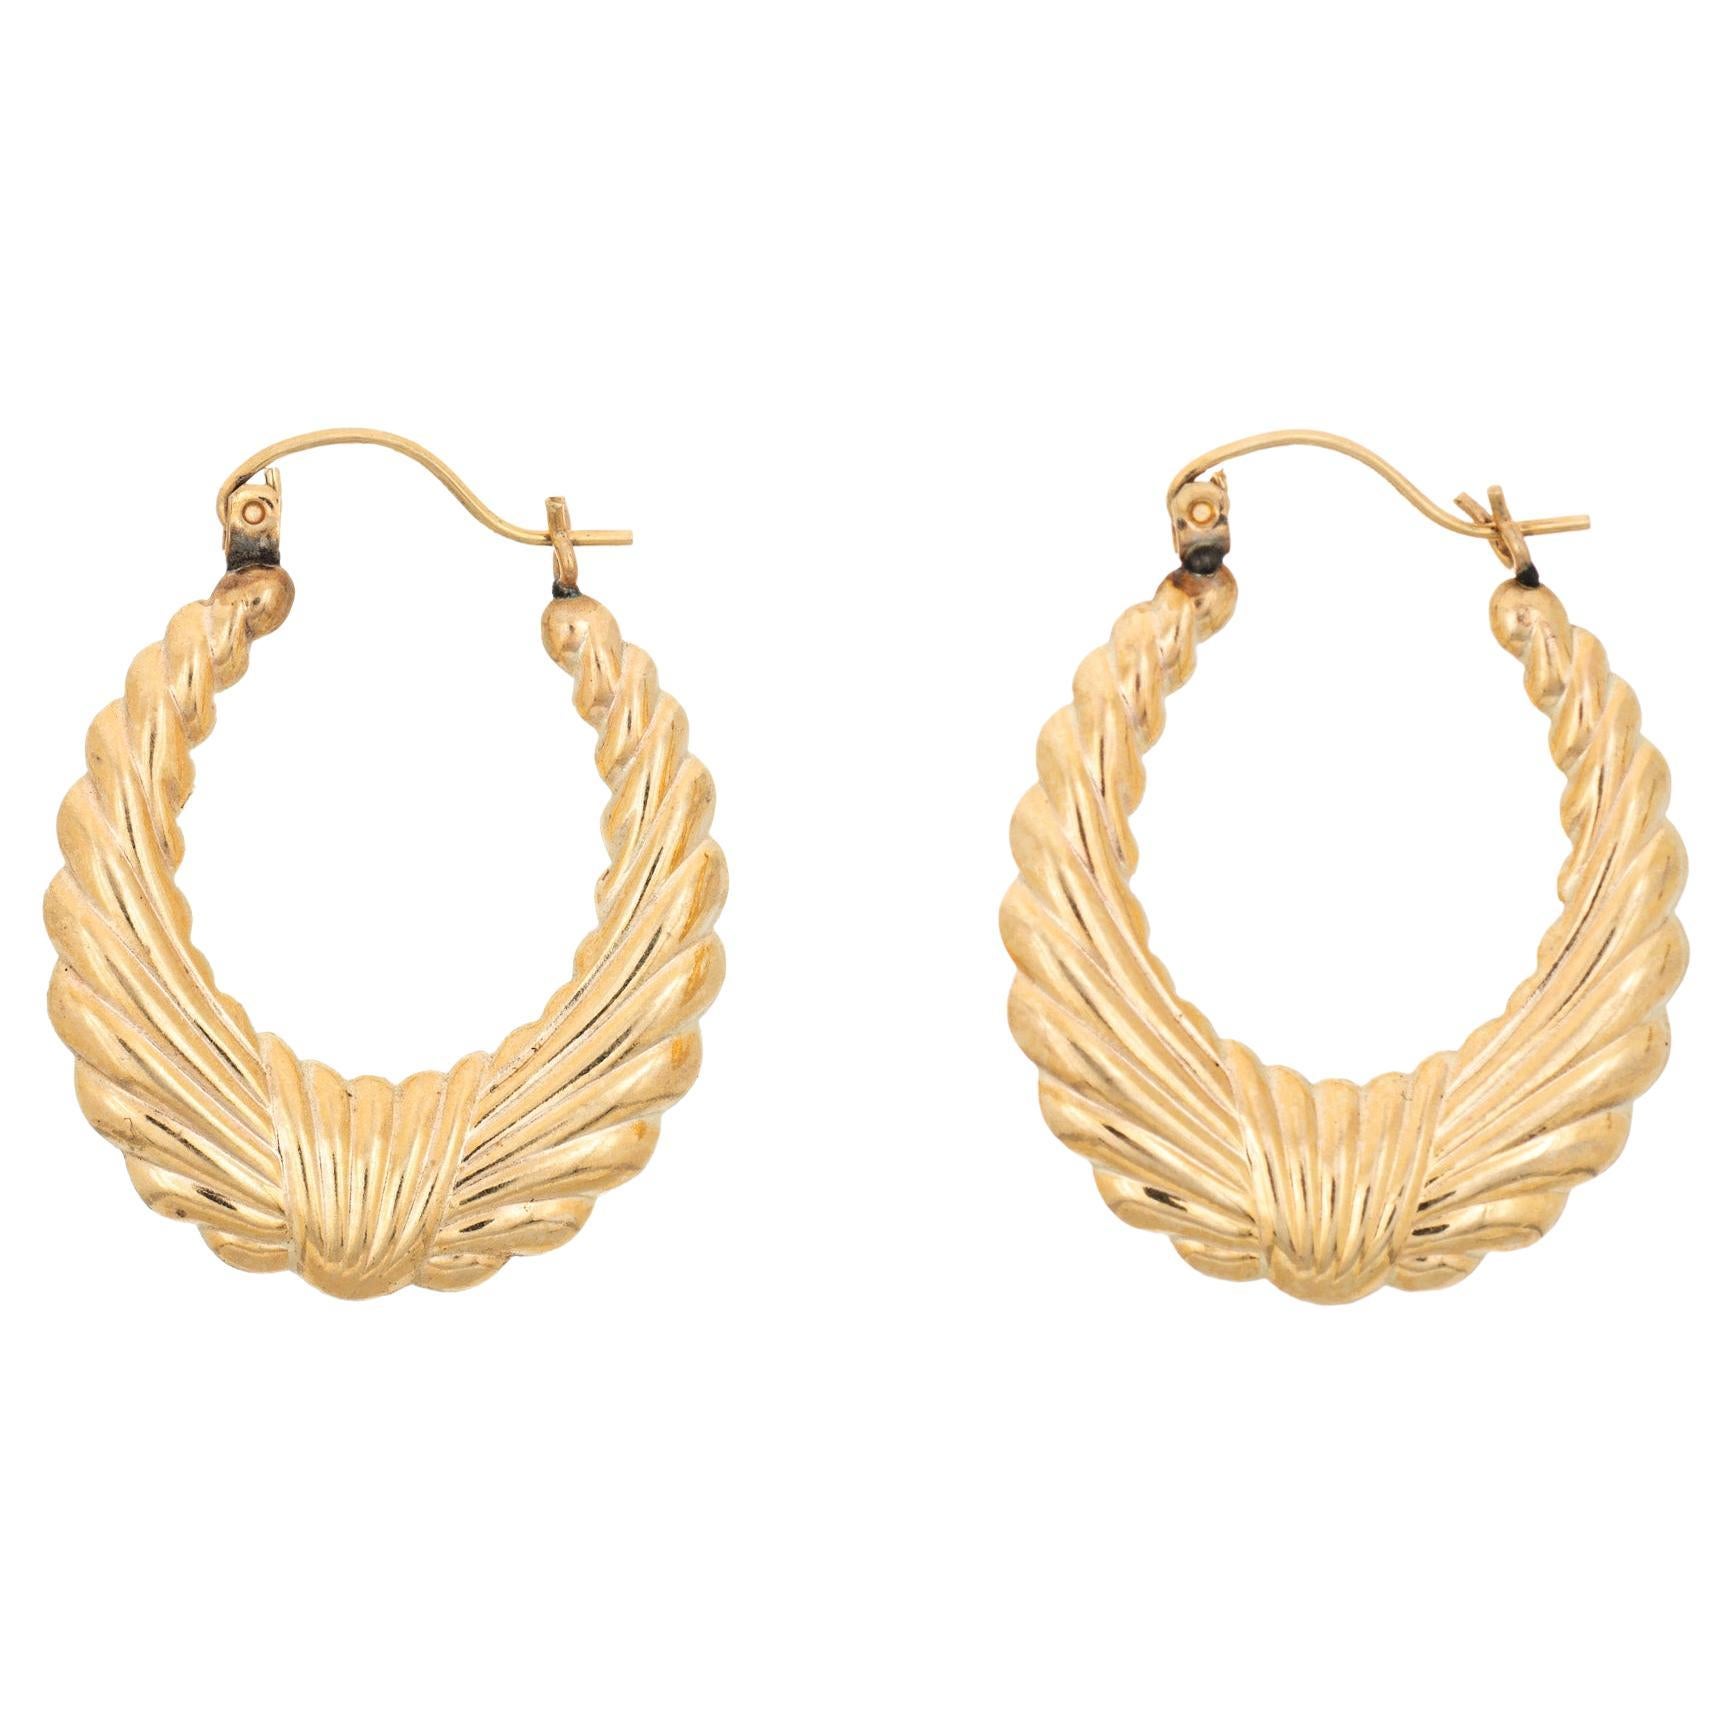 Oval Wreath Hoop Earrings Vintage 14k Gelbgold 1" Drops Estate Jewelry